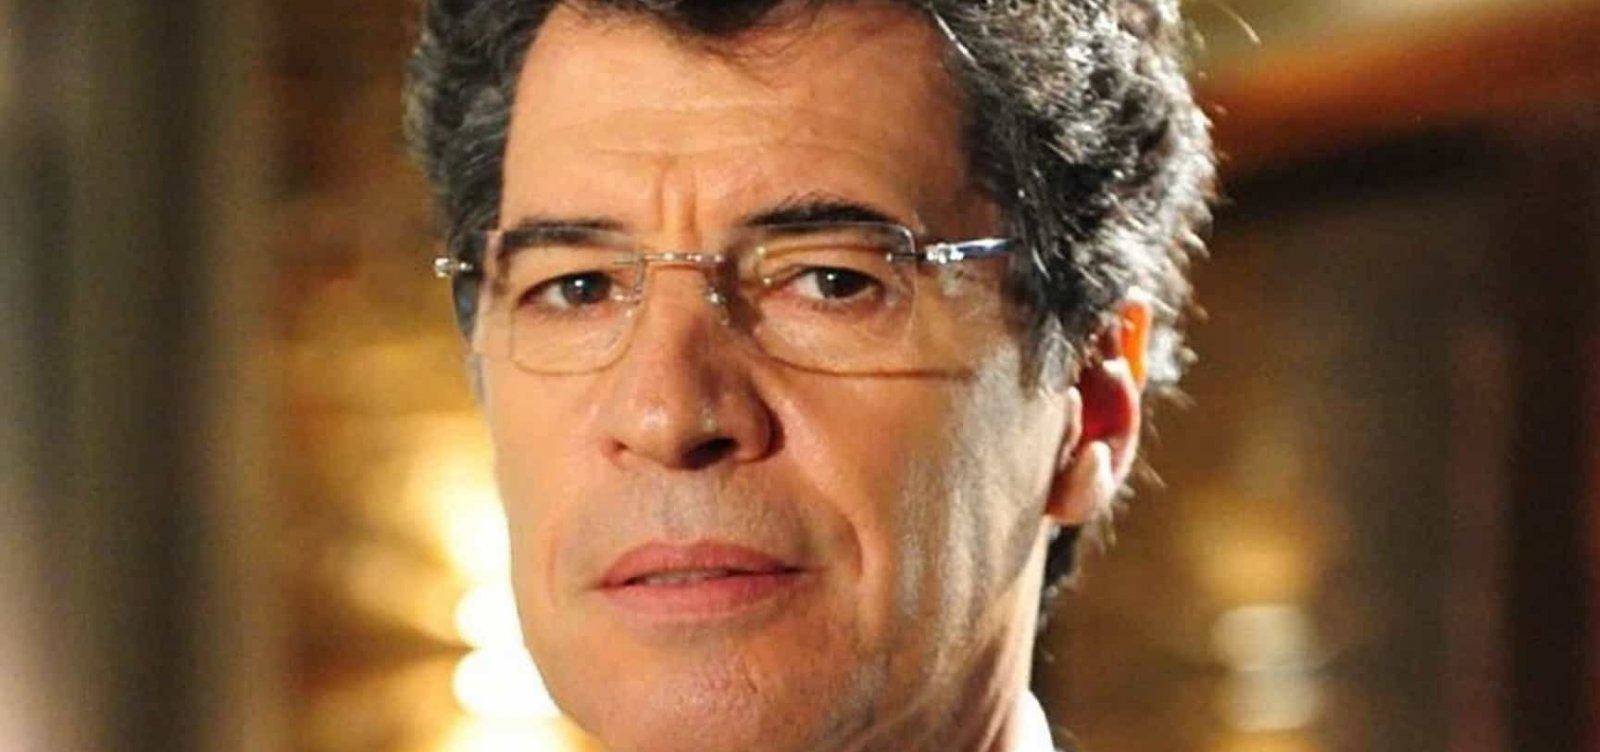 Paulo Betti é acusado de racismo por Milton Gonçalves e outros atores negros